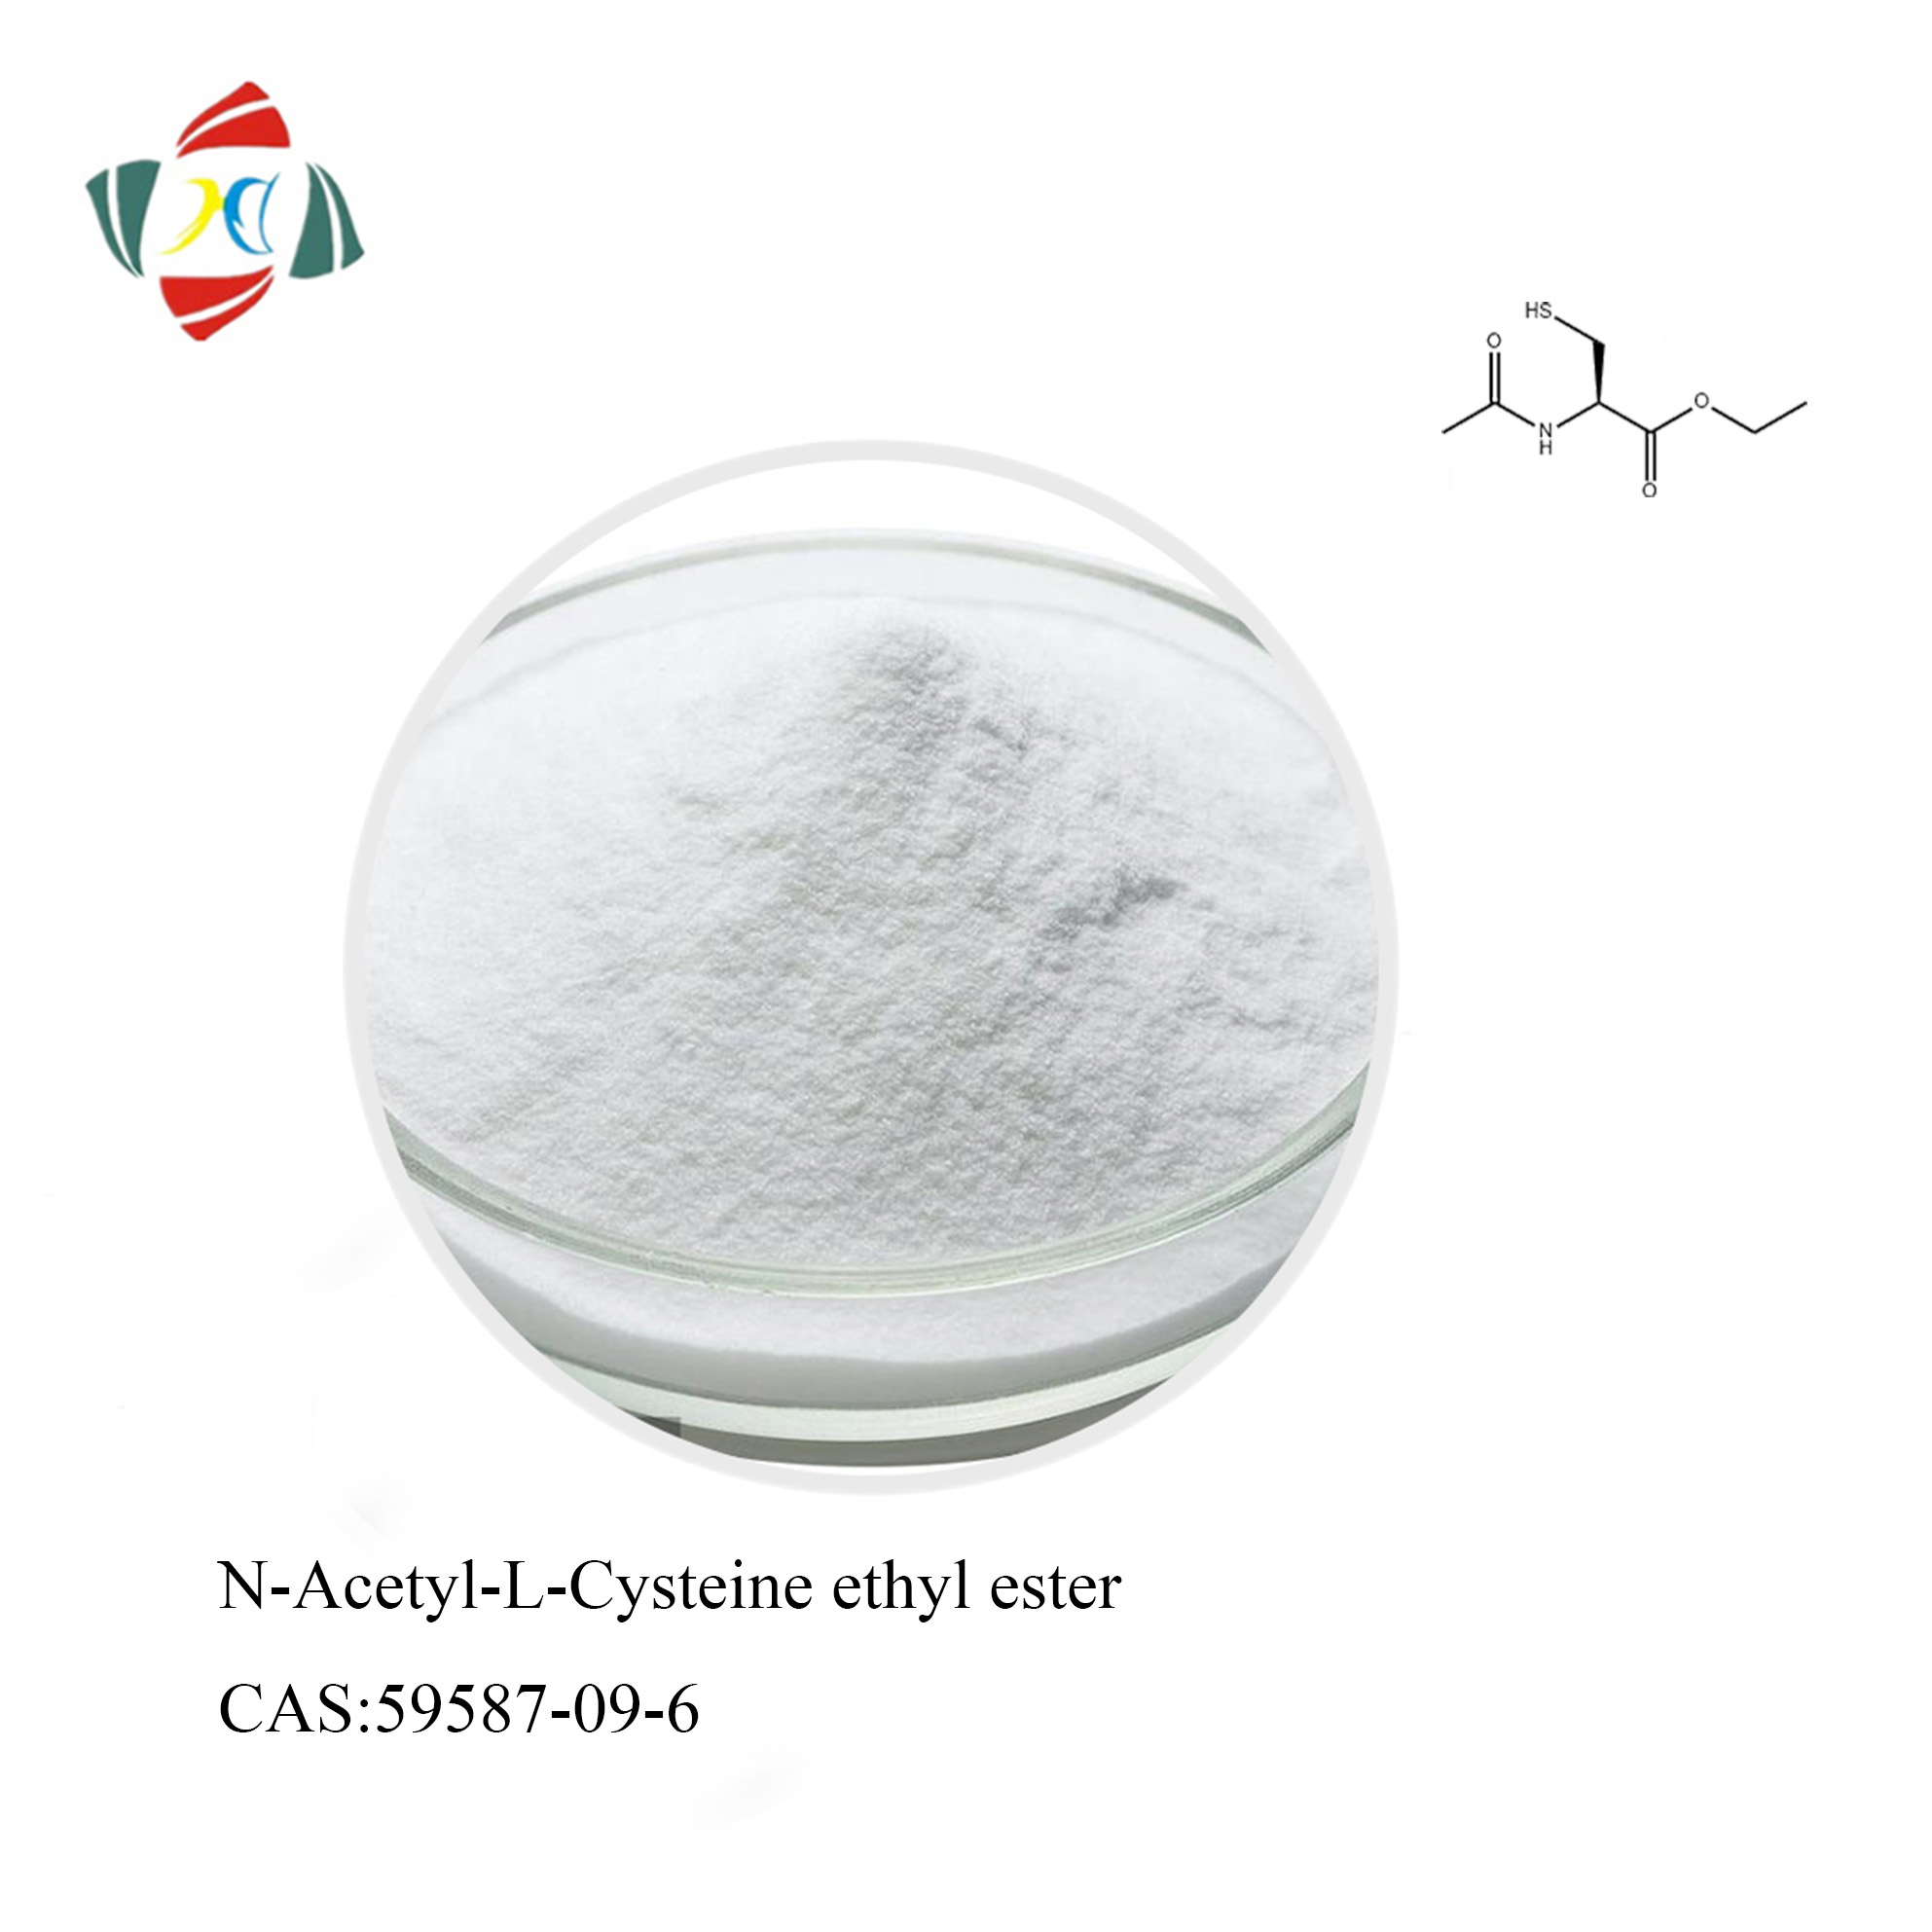 MACET N-acetil-L-cisteína etil éster (NACET) CAS 59587-09-6